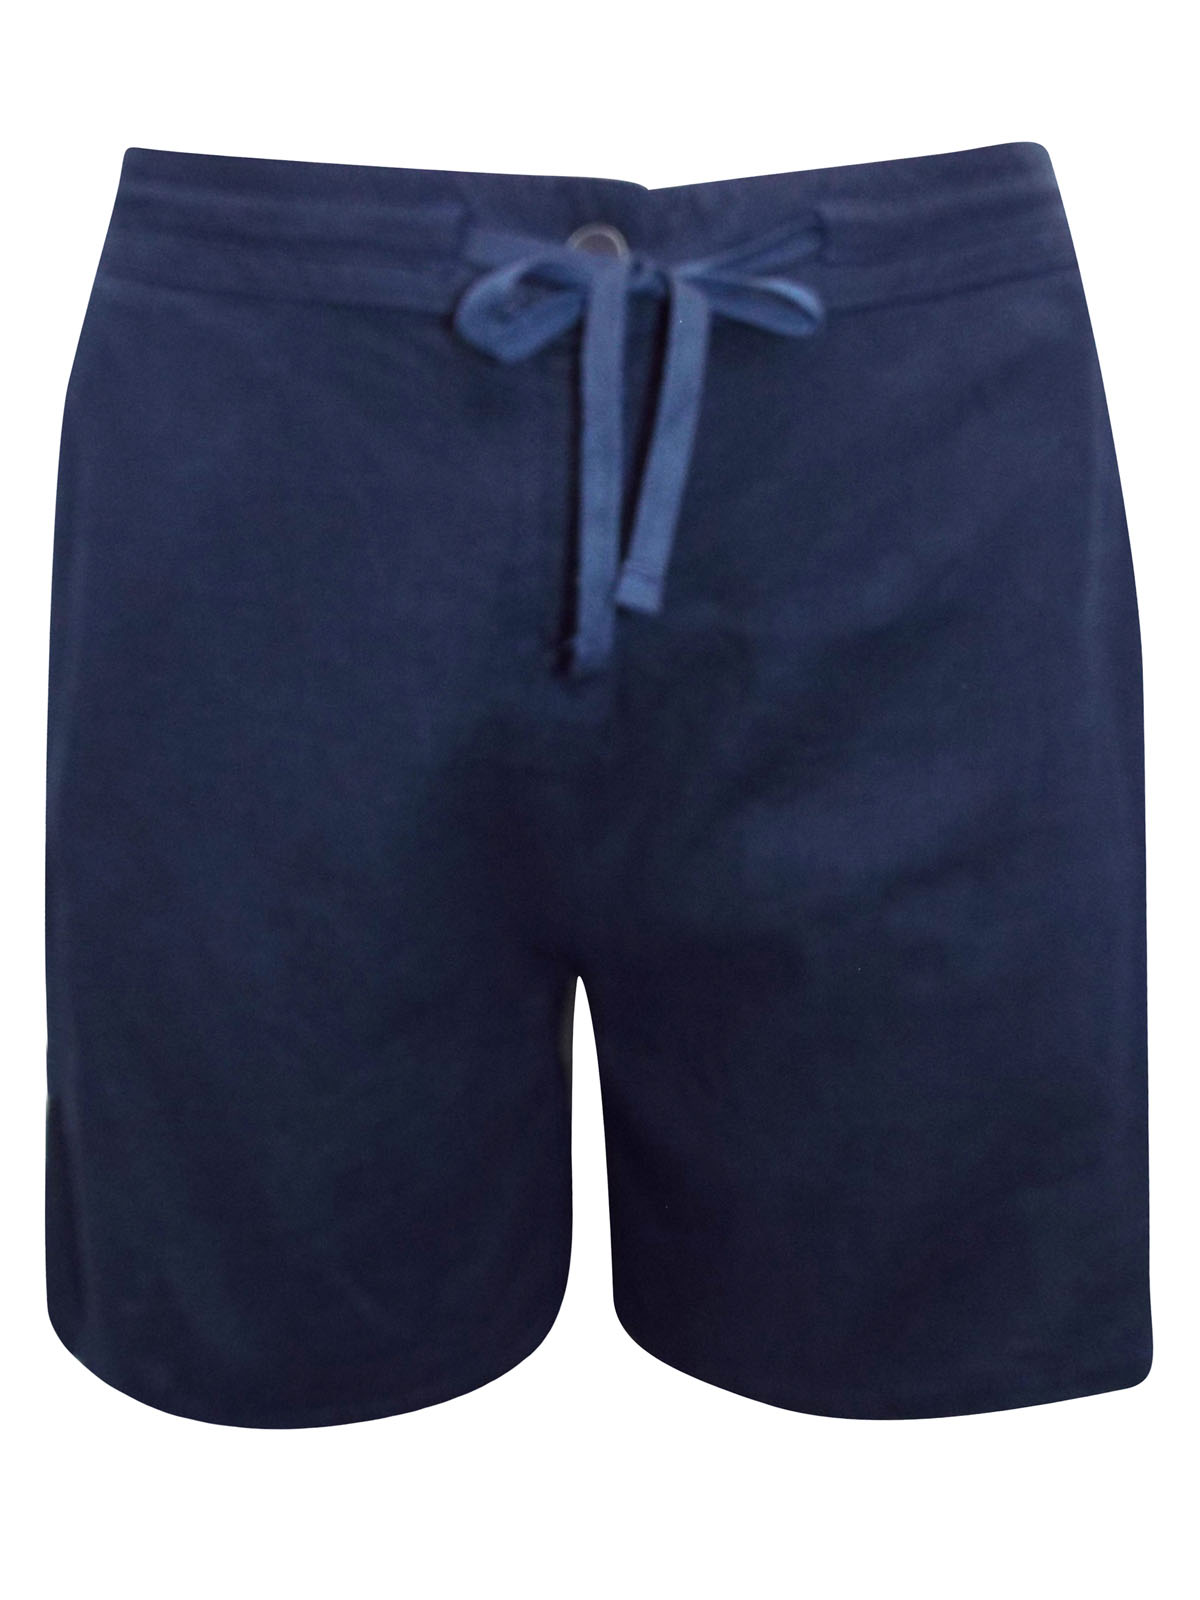 N3XT NAVY Linen Blend Drawstring Waist Shorts - Plus Size 18 to 26